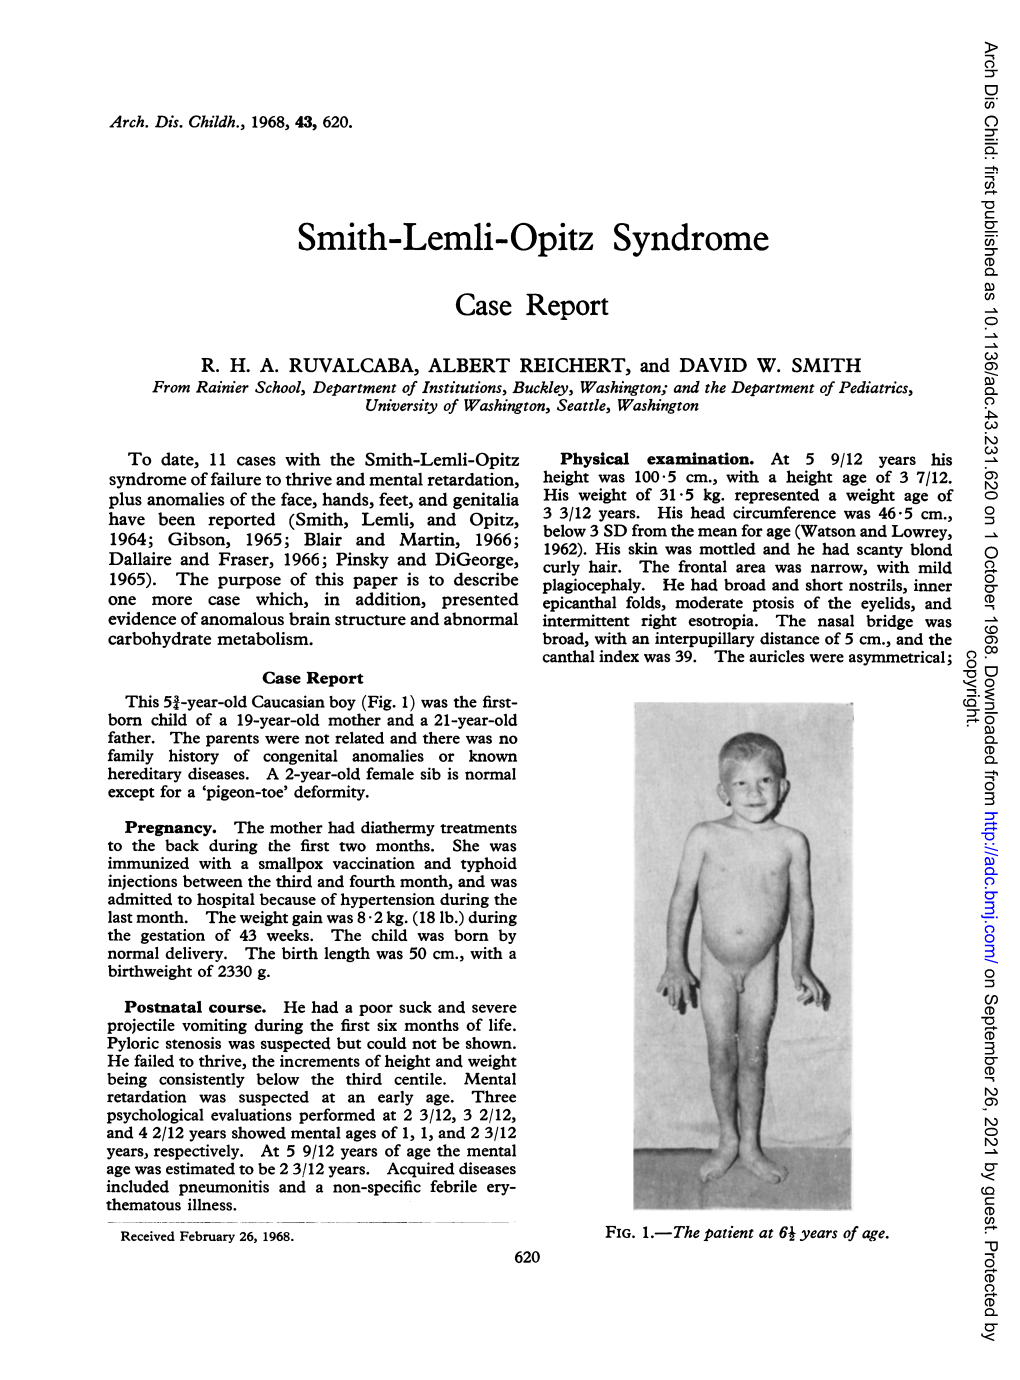 Smith-Lemli-Opitz Syndrome Case Report